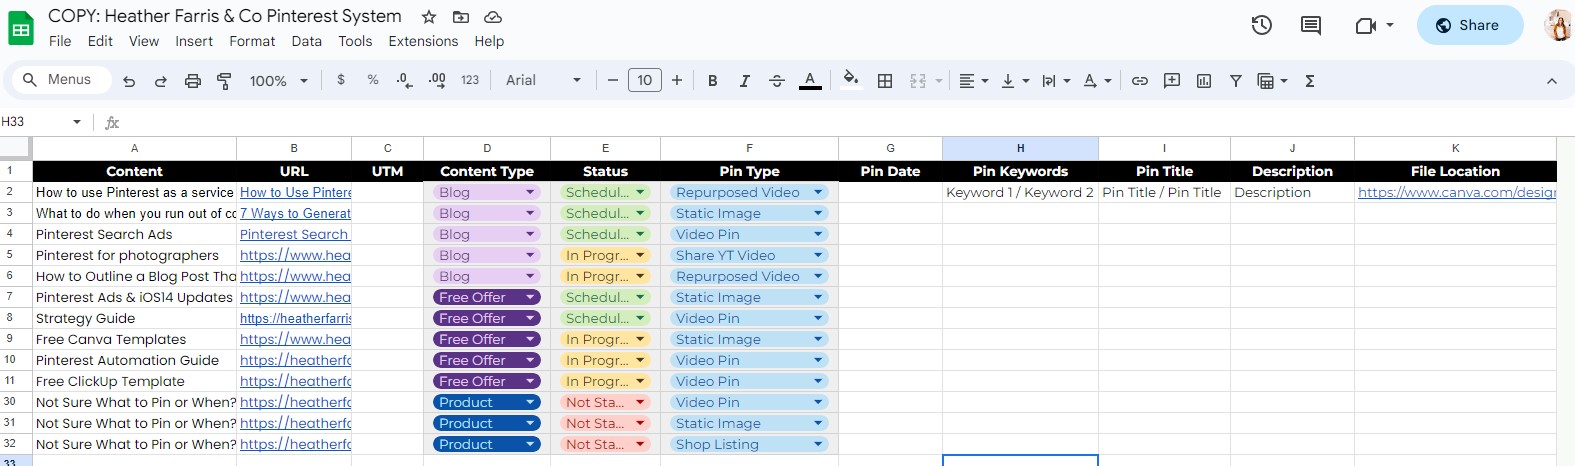 my Pinterest system spreadsheet for my  Pinterest workflow